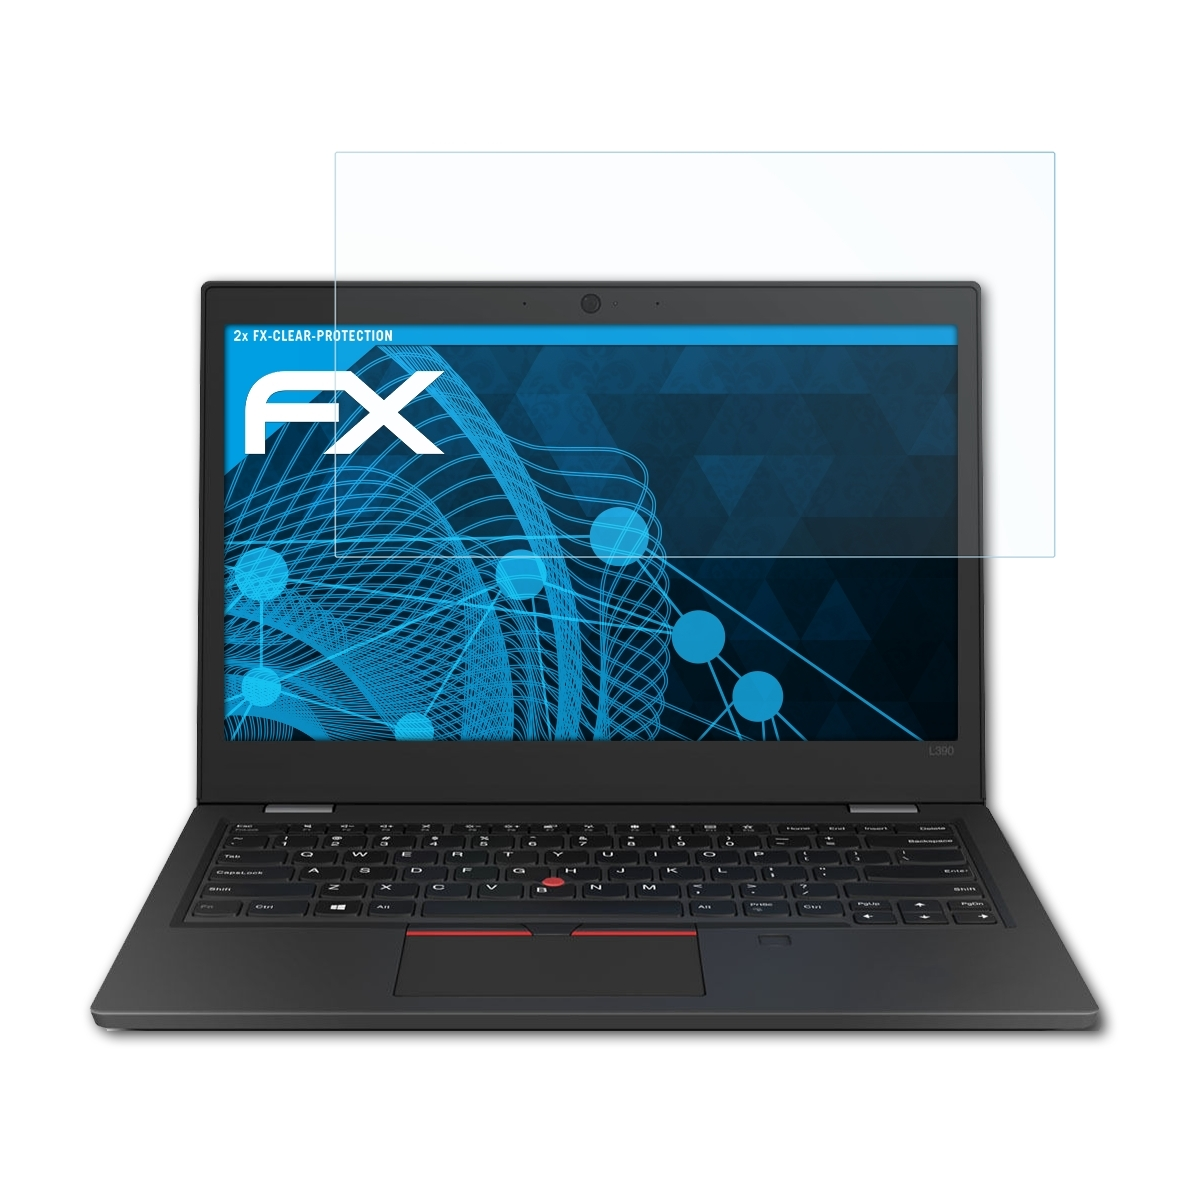 Lenovo ThinkPad Displayschutz(für ATFOLIX L390) 2x FX-Clear